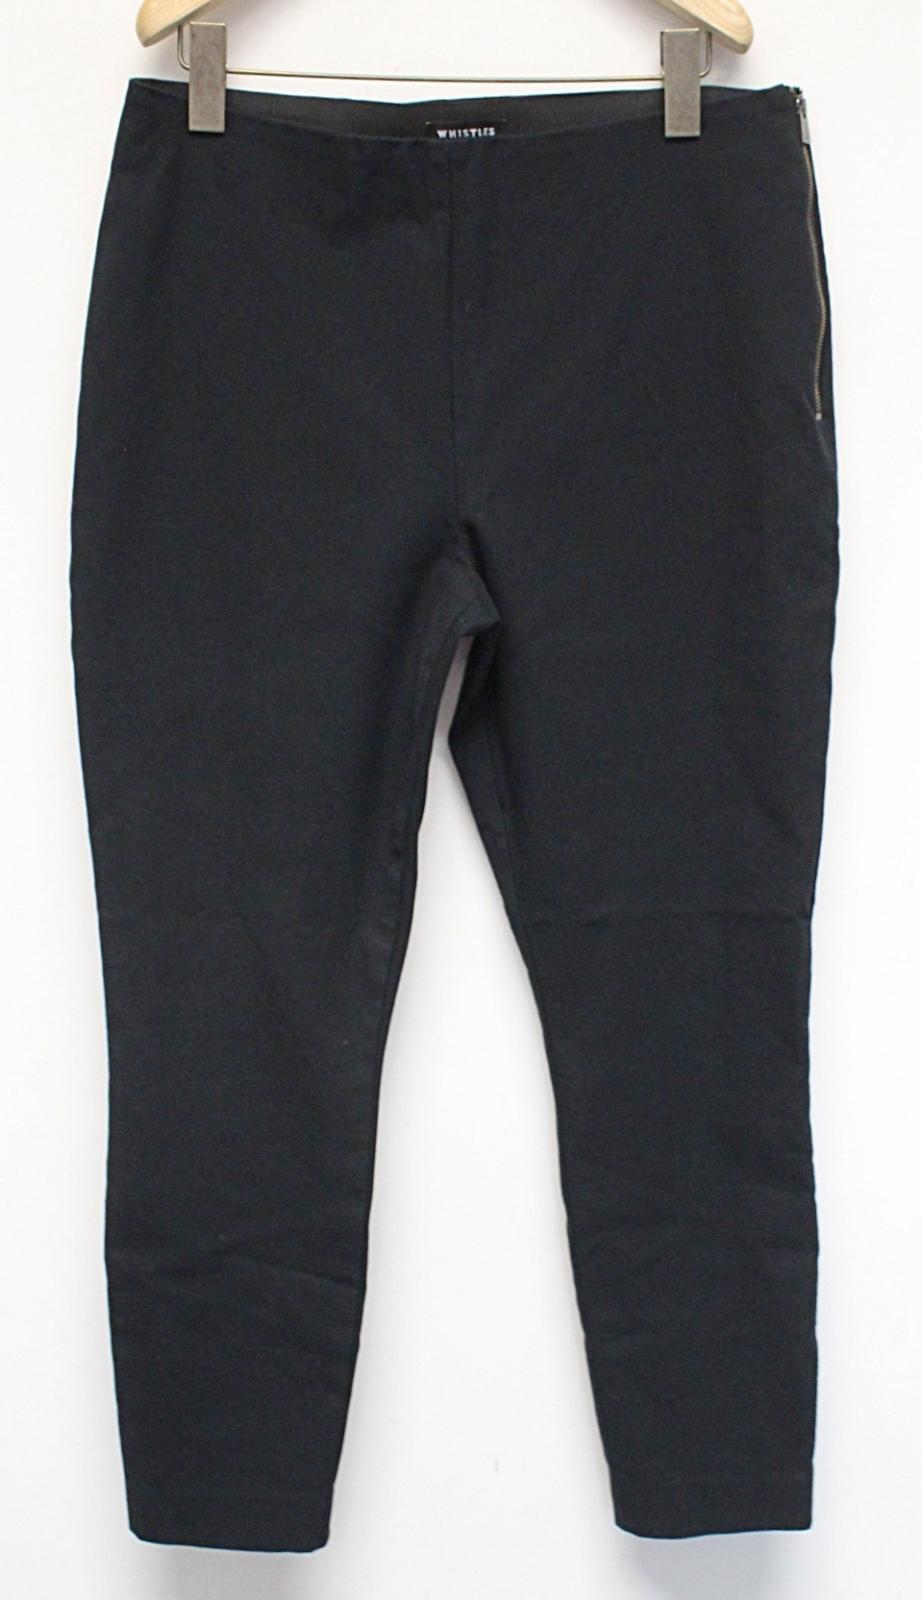 WHISTLES Ladies Super Stretch Black Side Zip Cotton Blend Trousers UK14 W32 L26